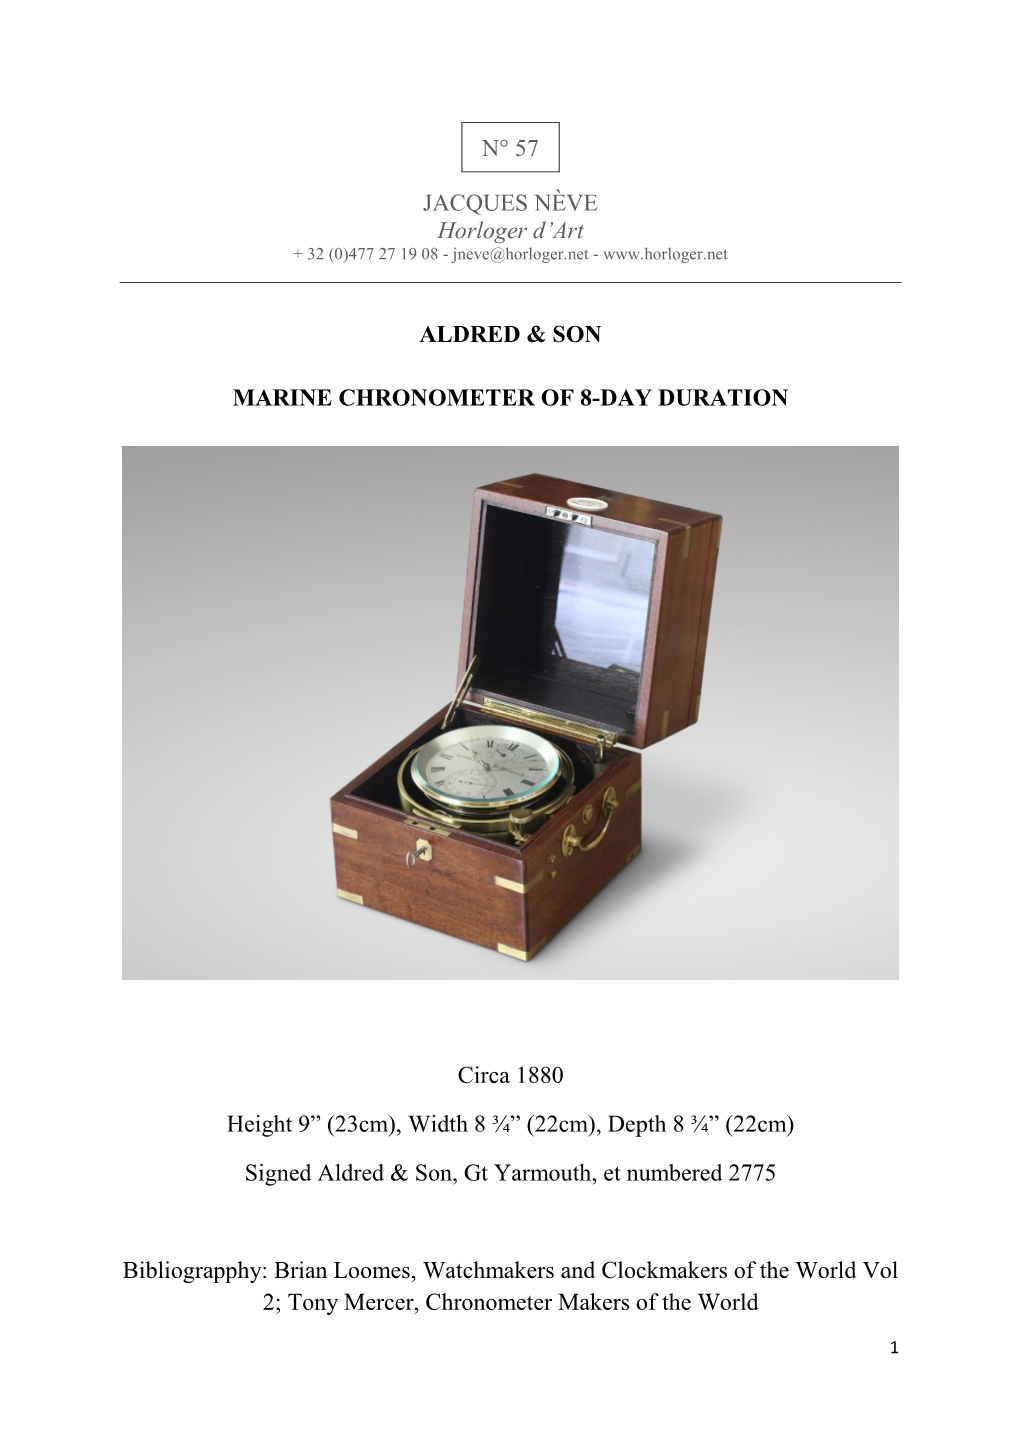 N° 57 JACQUES NÈVE Horloger D'art ALDRED & SON MARINE CHRONOMETER of 8-DAY DURATION Circa 1880 Height 9” (23Cm), Width